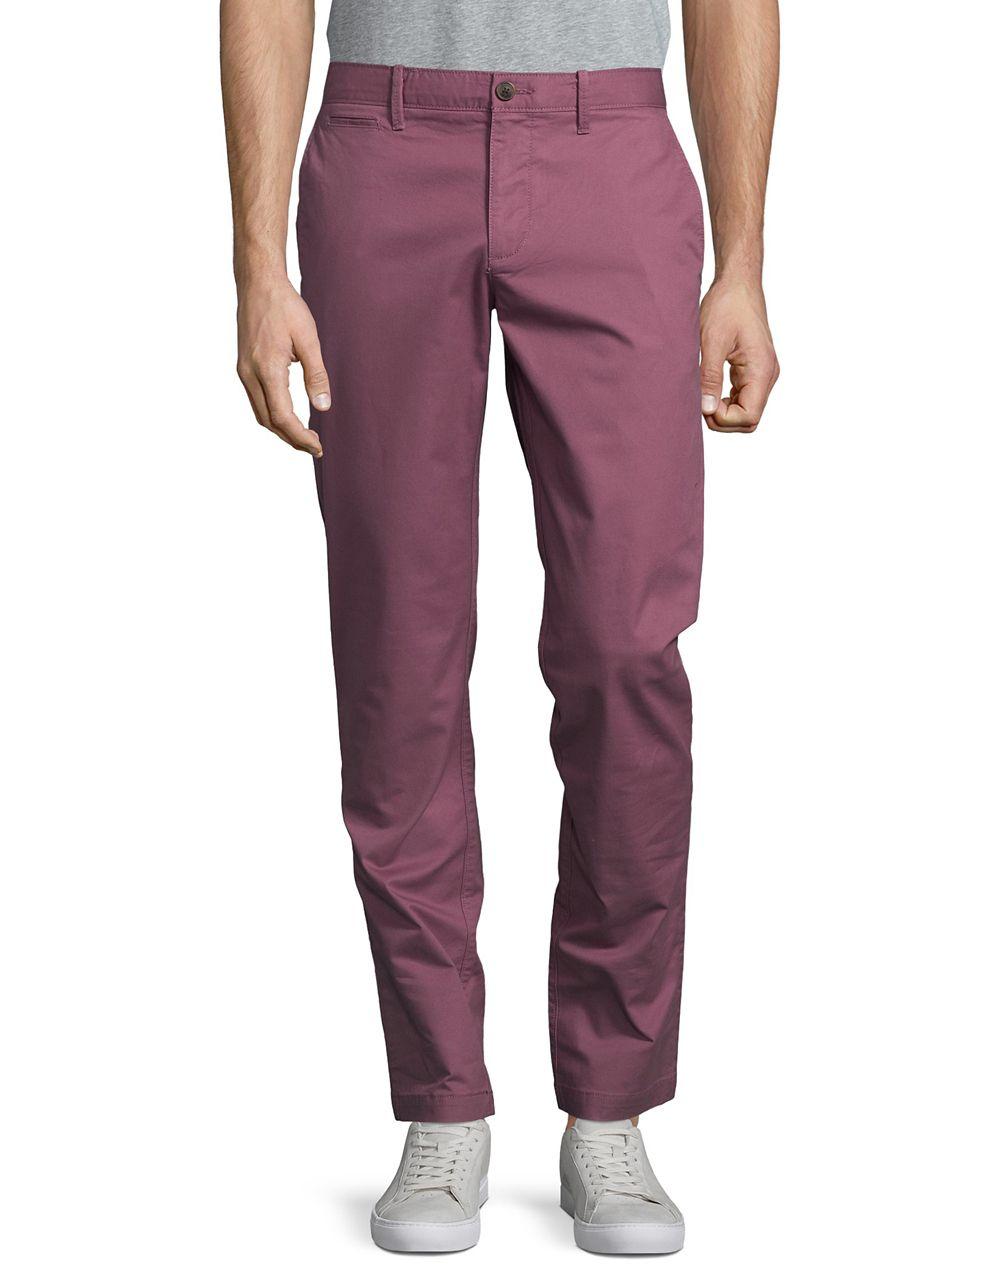 Lyst - Original Penguin Slim Fit Chino Pants in Purple for Men